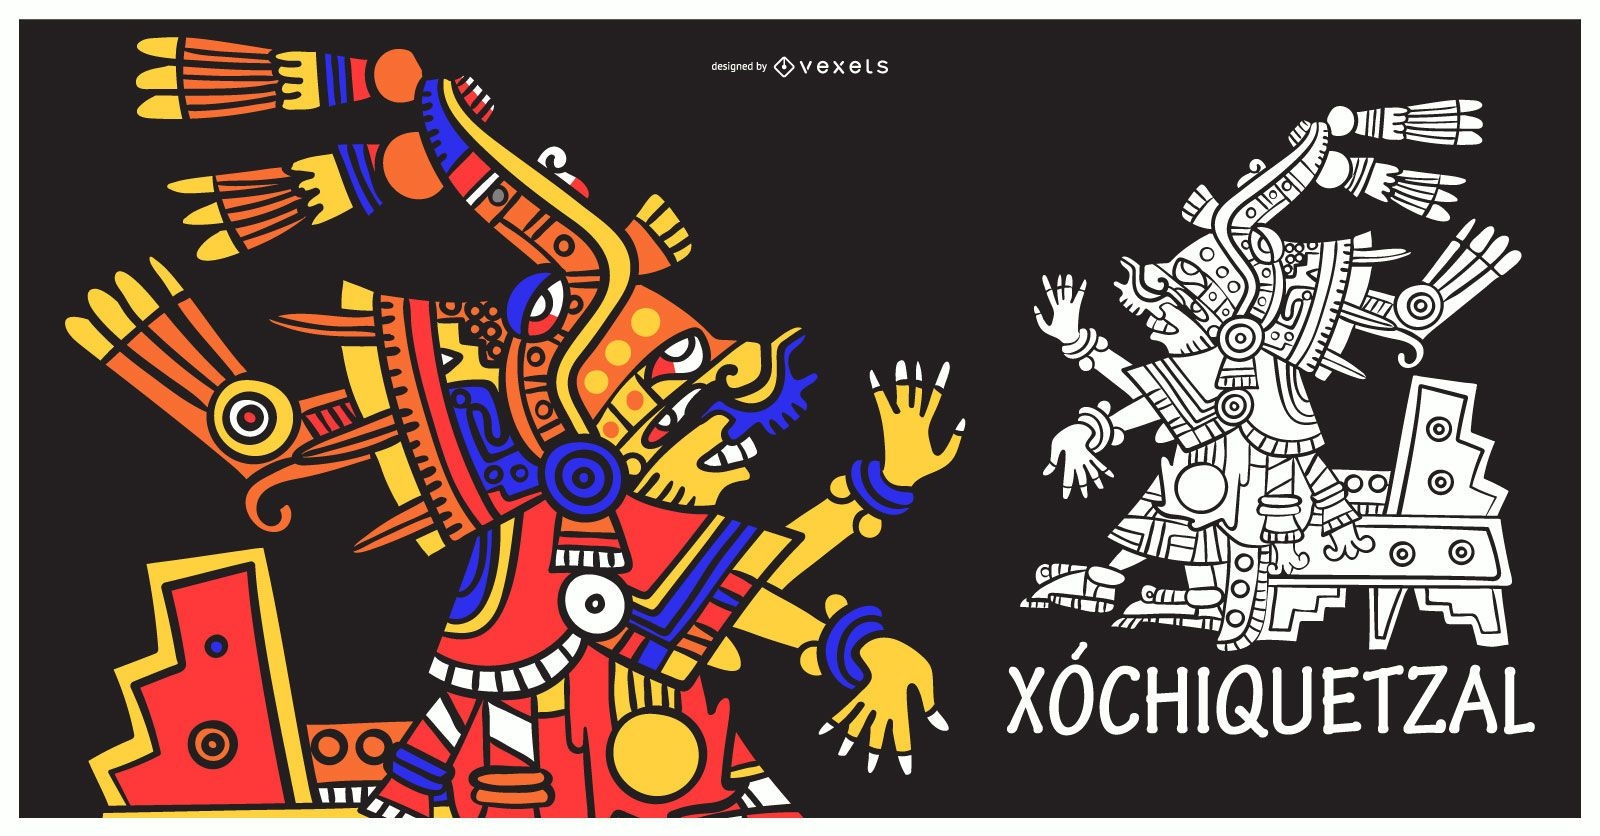 Ilustraci?n del dios azteca xochiquetzal